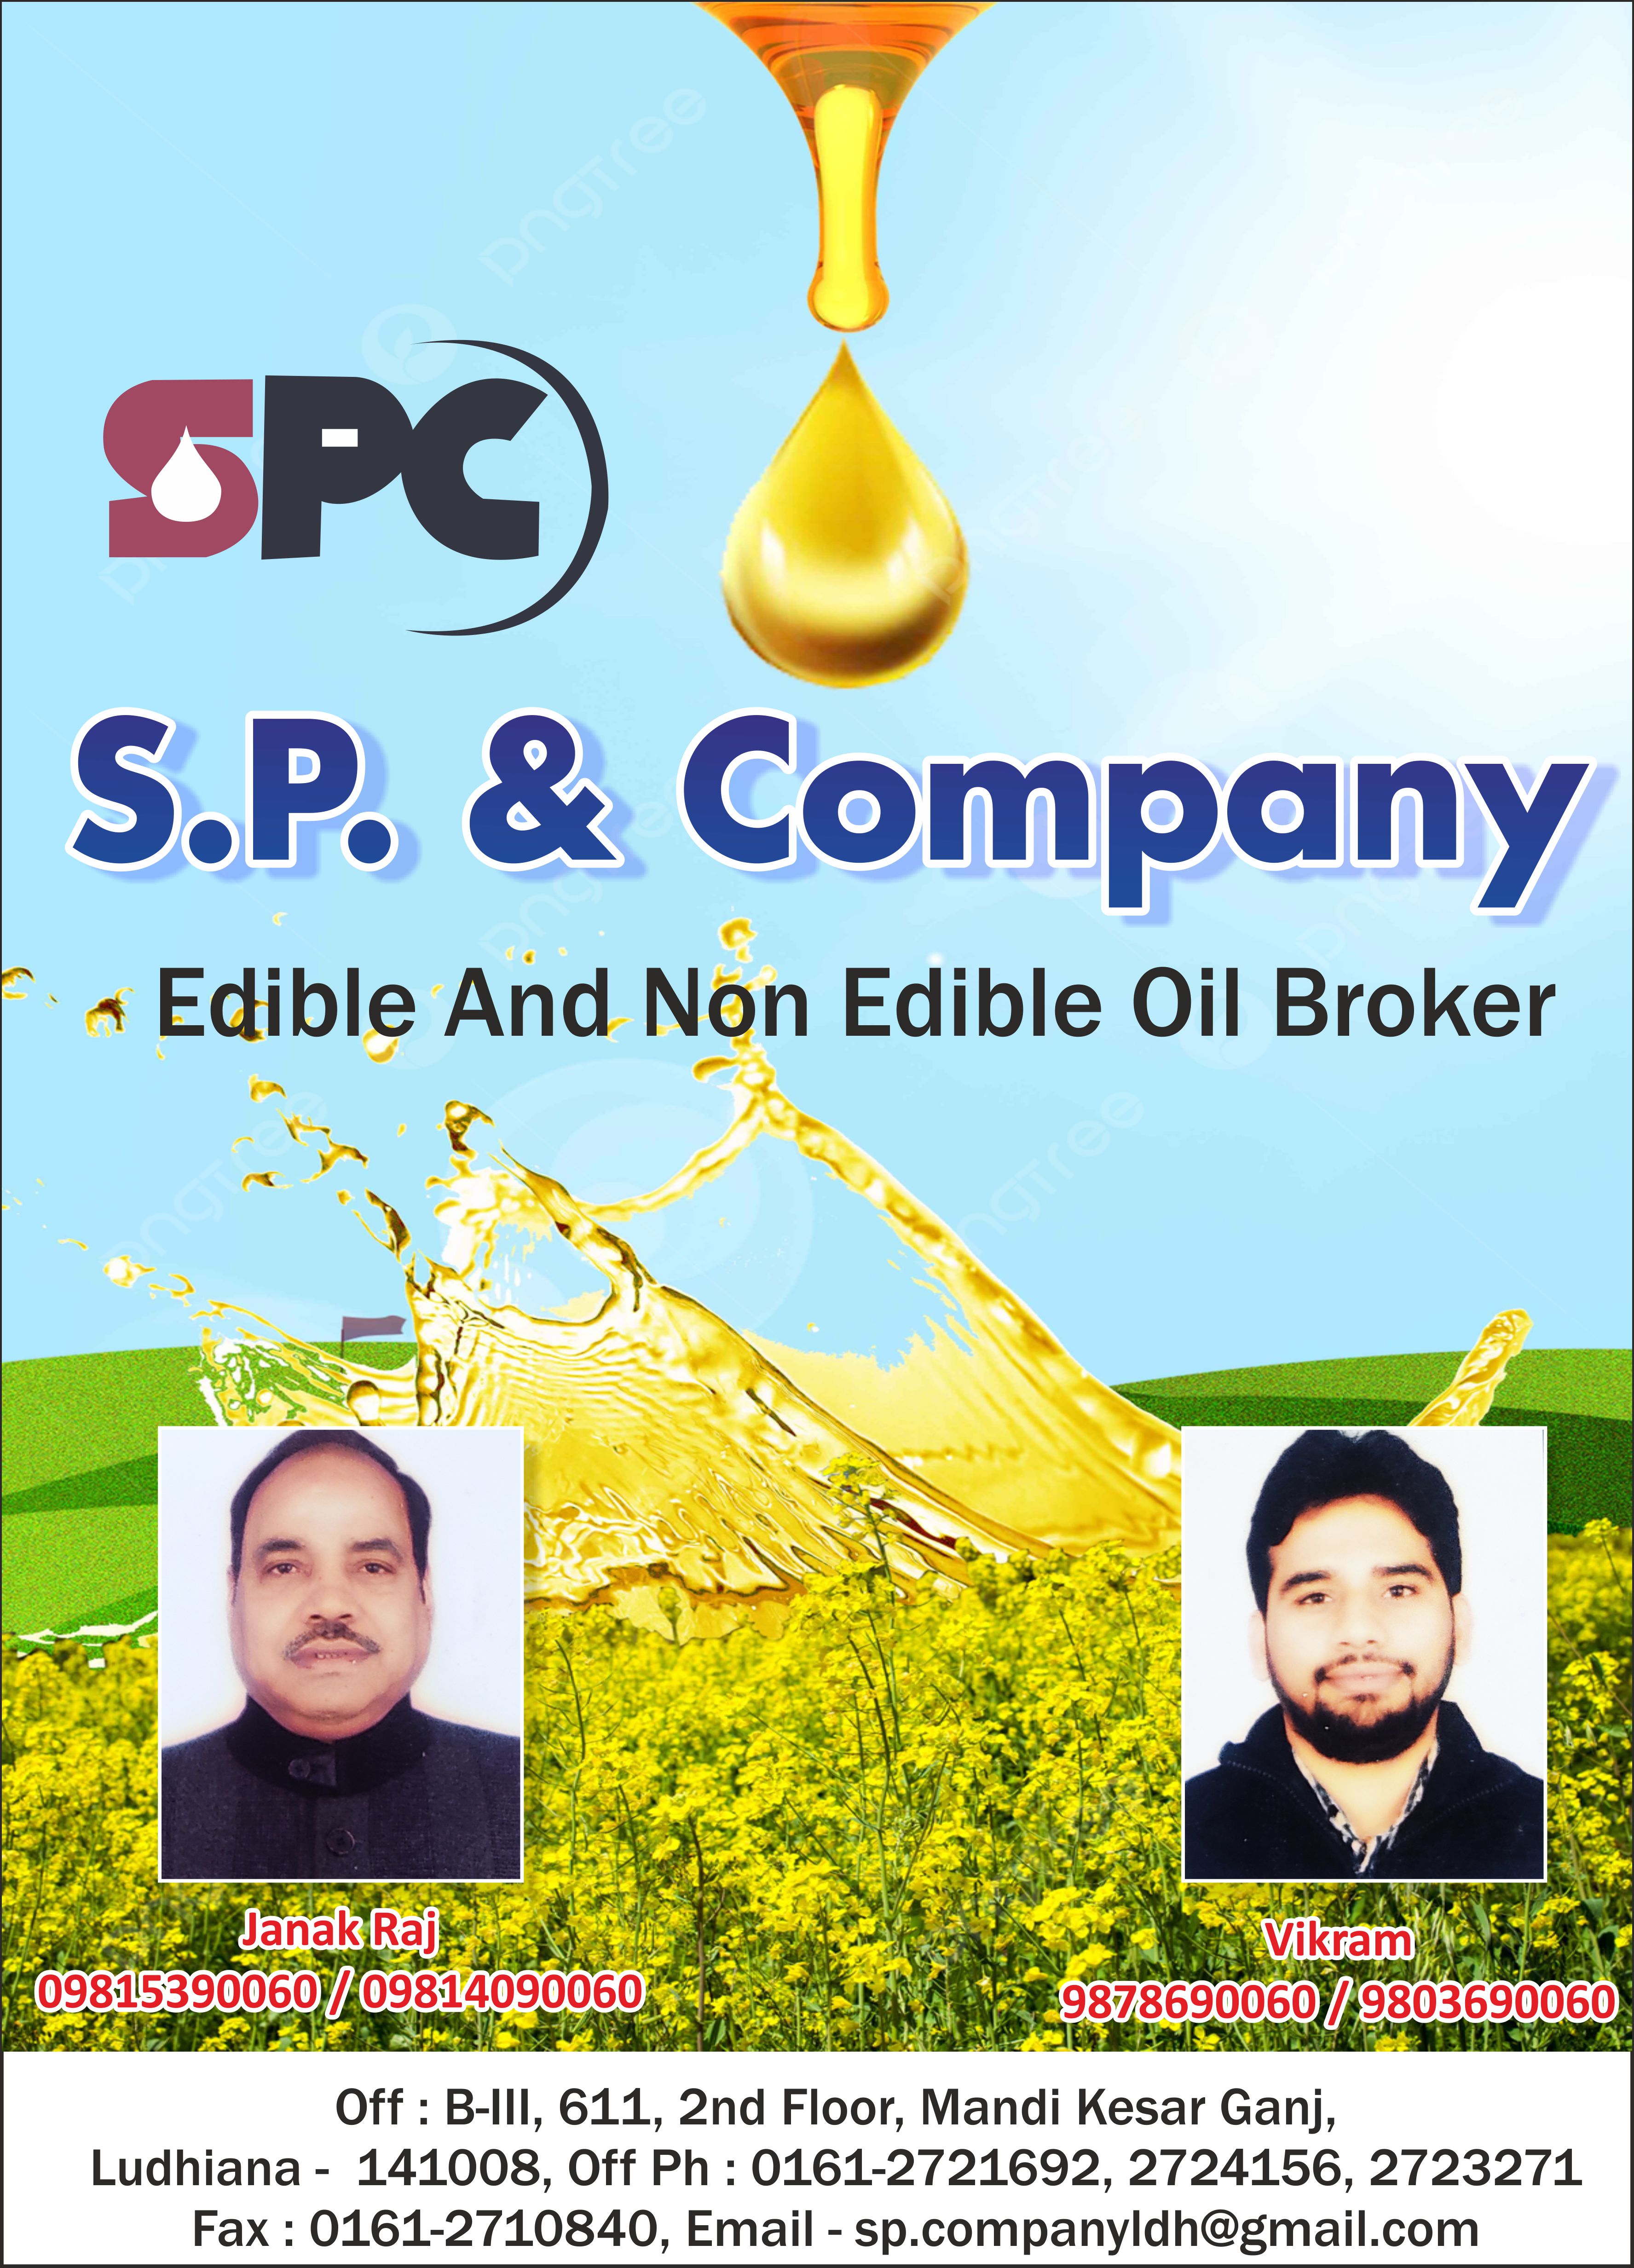 S. P. & Company